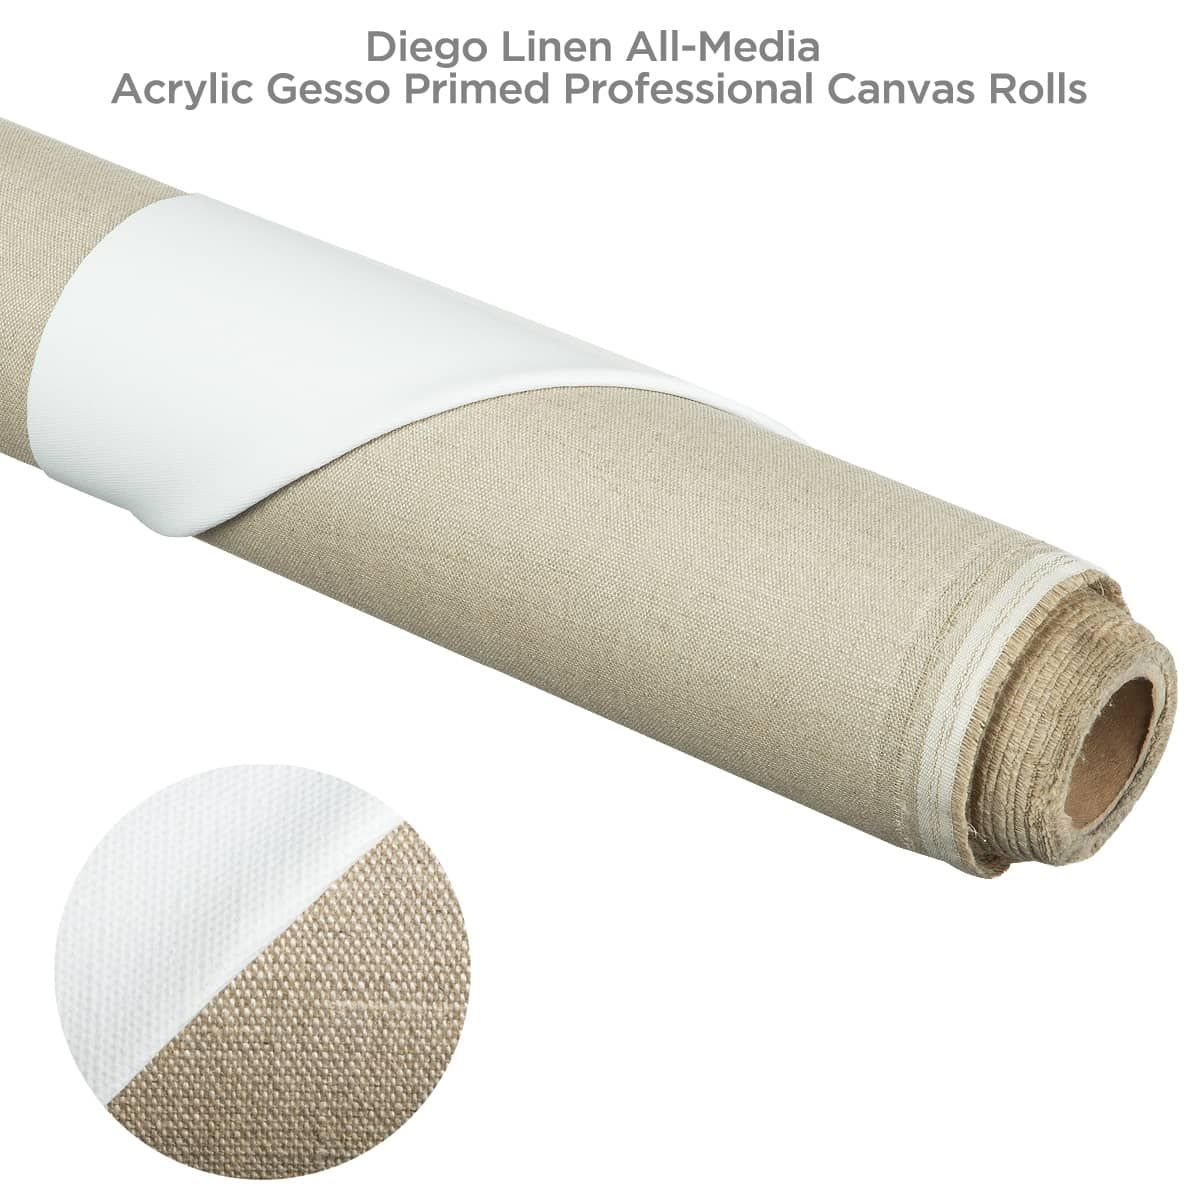 Diego Linen All-Media Acrylic Gesso Primed Professional Canvas Rolls